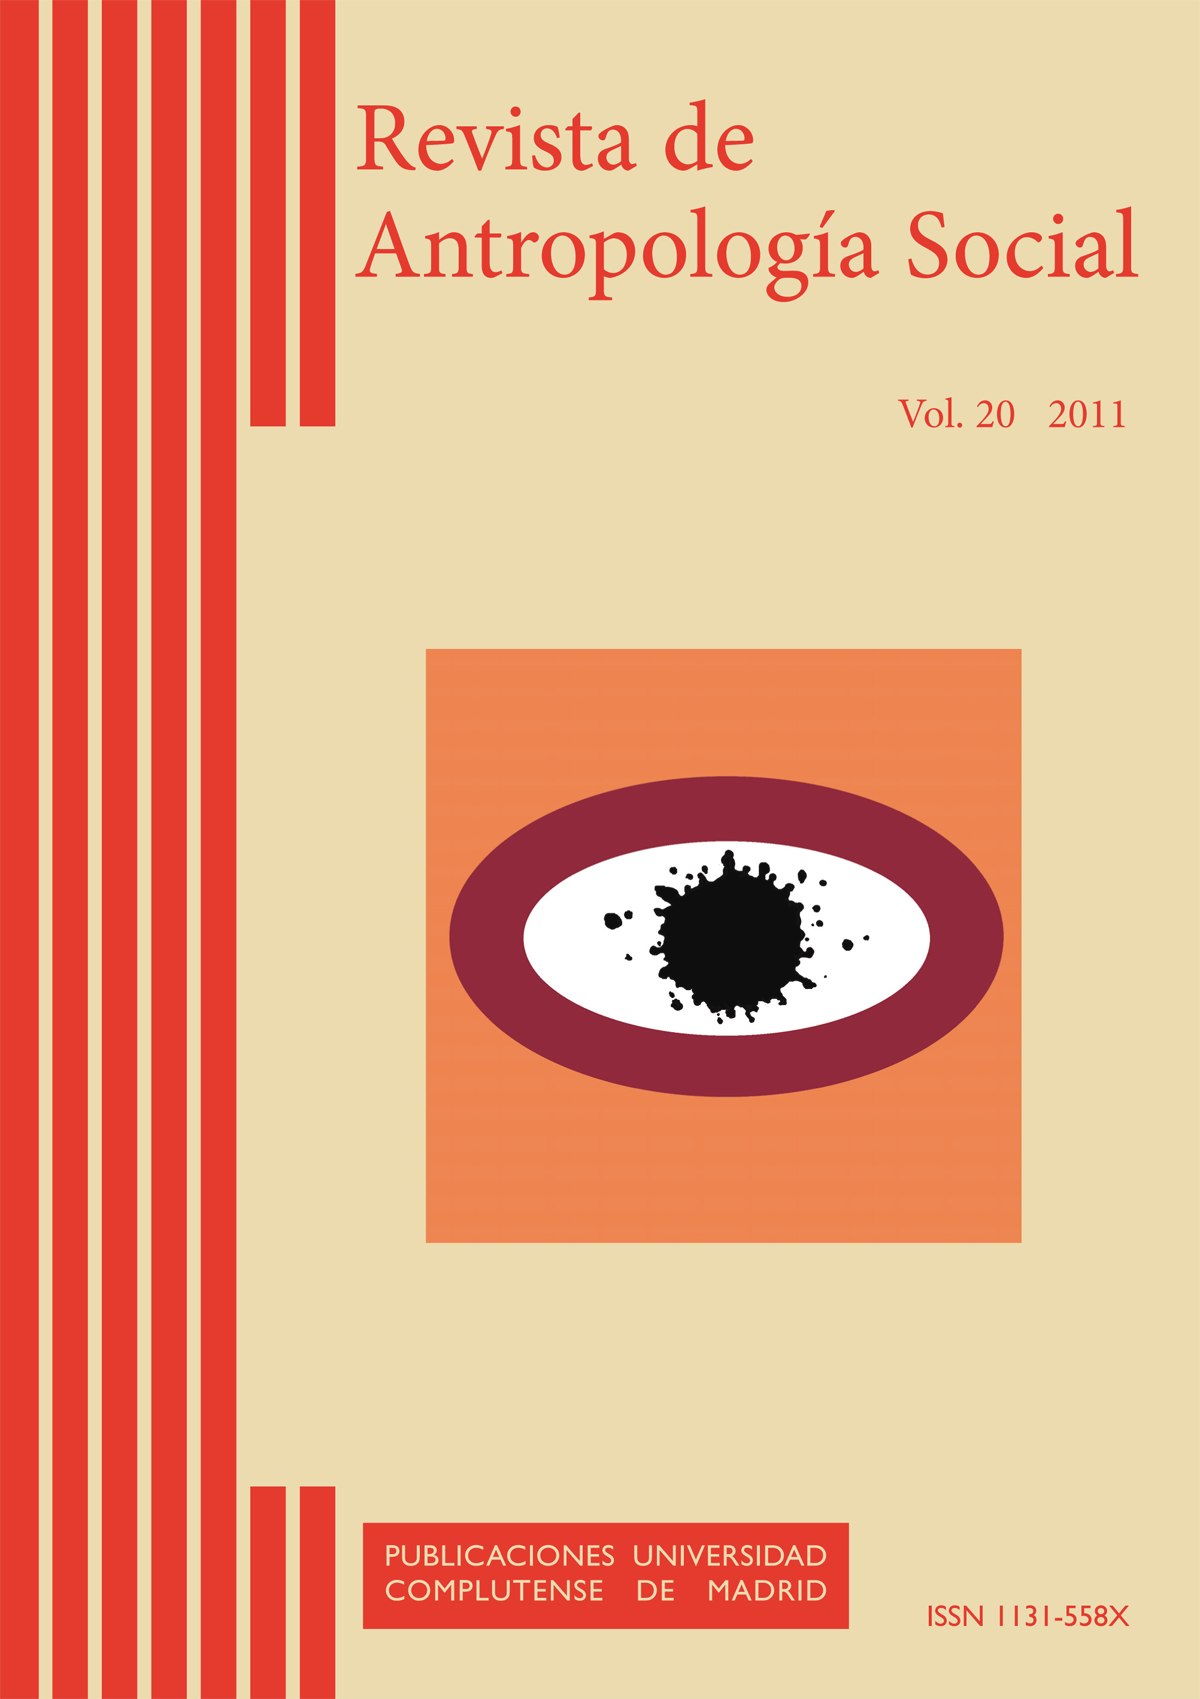 Revista de Antropología Social Vol. 20